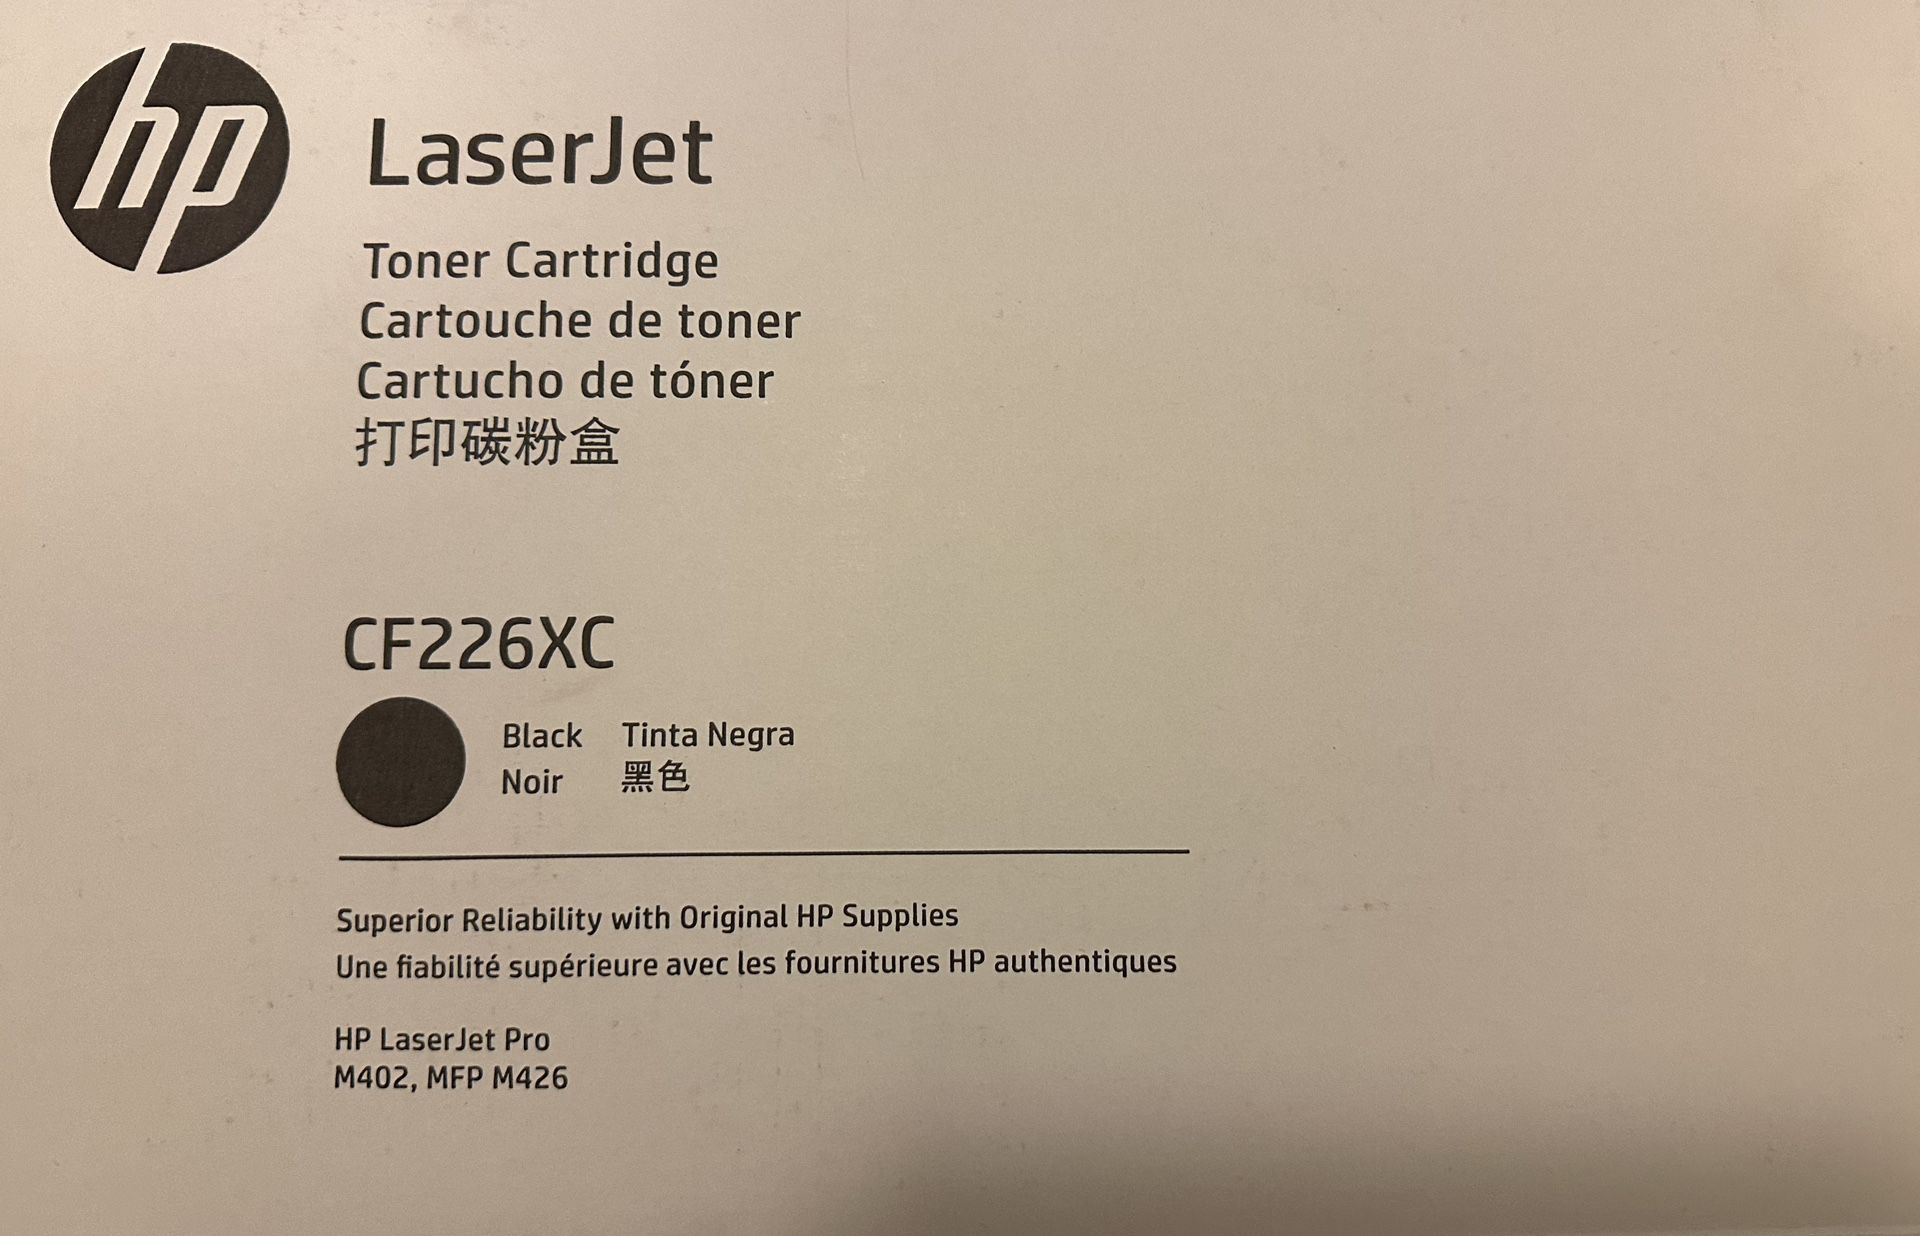 HP Printer cartridges CF226XC